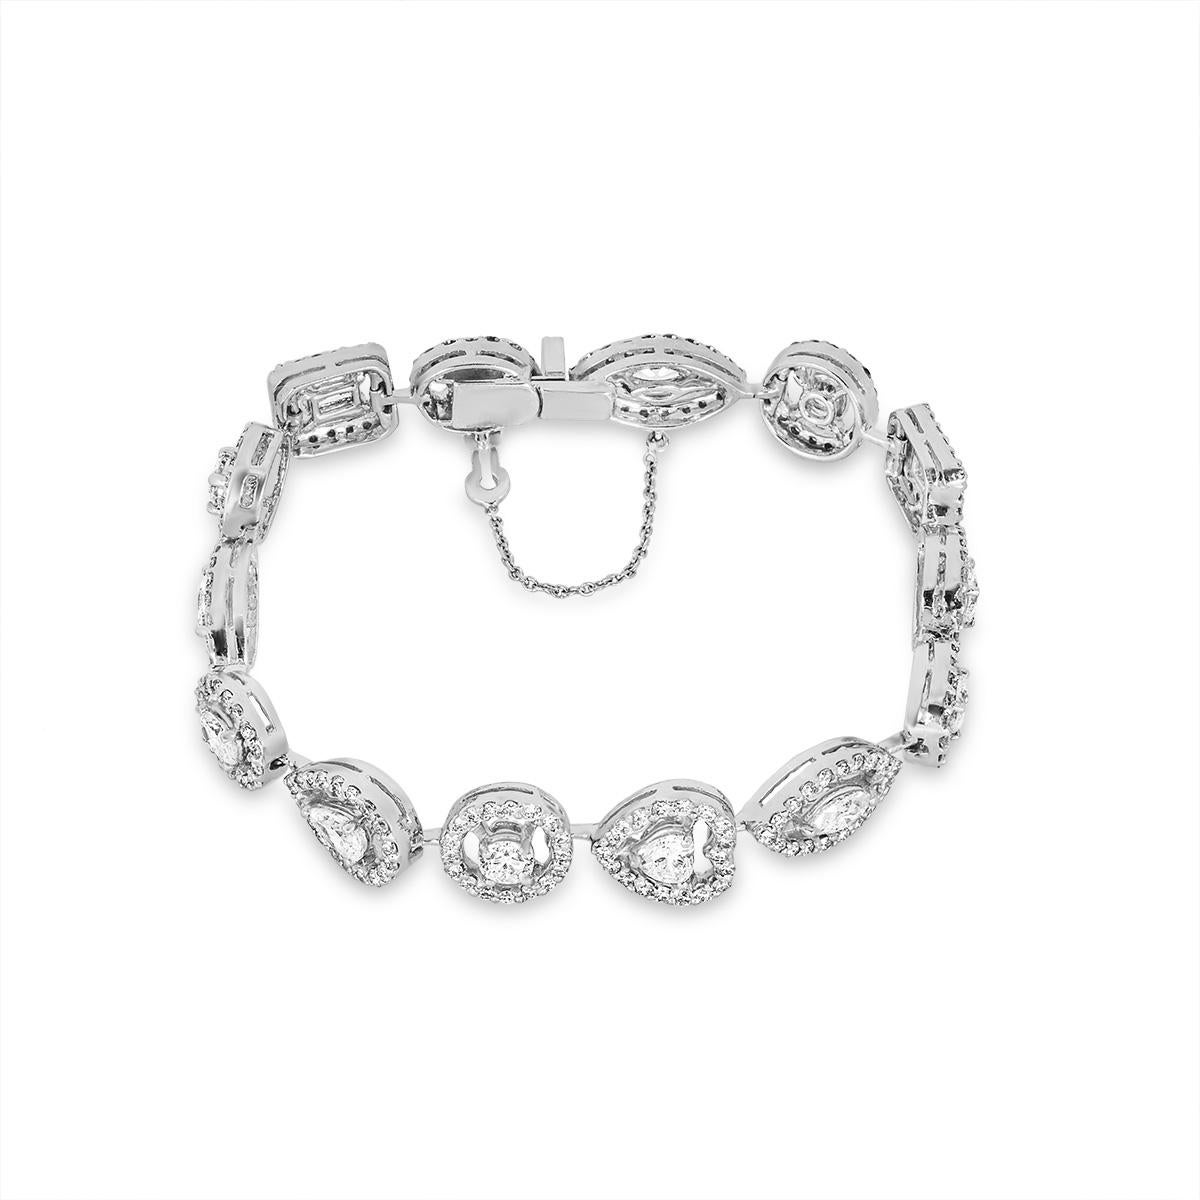 A stunning 18k white gold diamond halo bracelet. The bracelet features 14 diamond stations comprising of: 3 oval cut diamonds, 2 emerald cut diamonds, 3 round brilliant cut diamonds, 3 marquise cut diamonds, 2 pear cut diamonds, 1 heart shaped